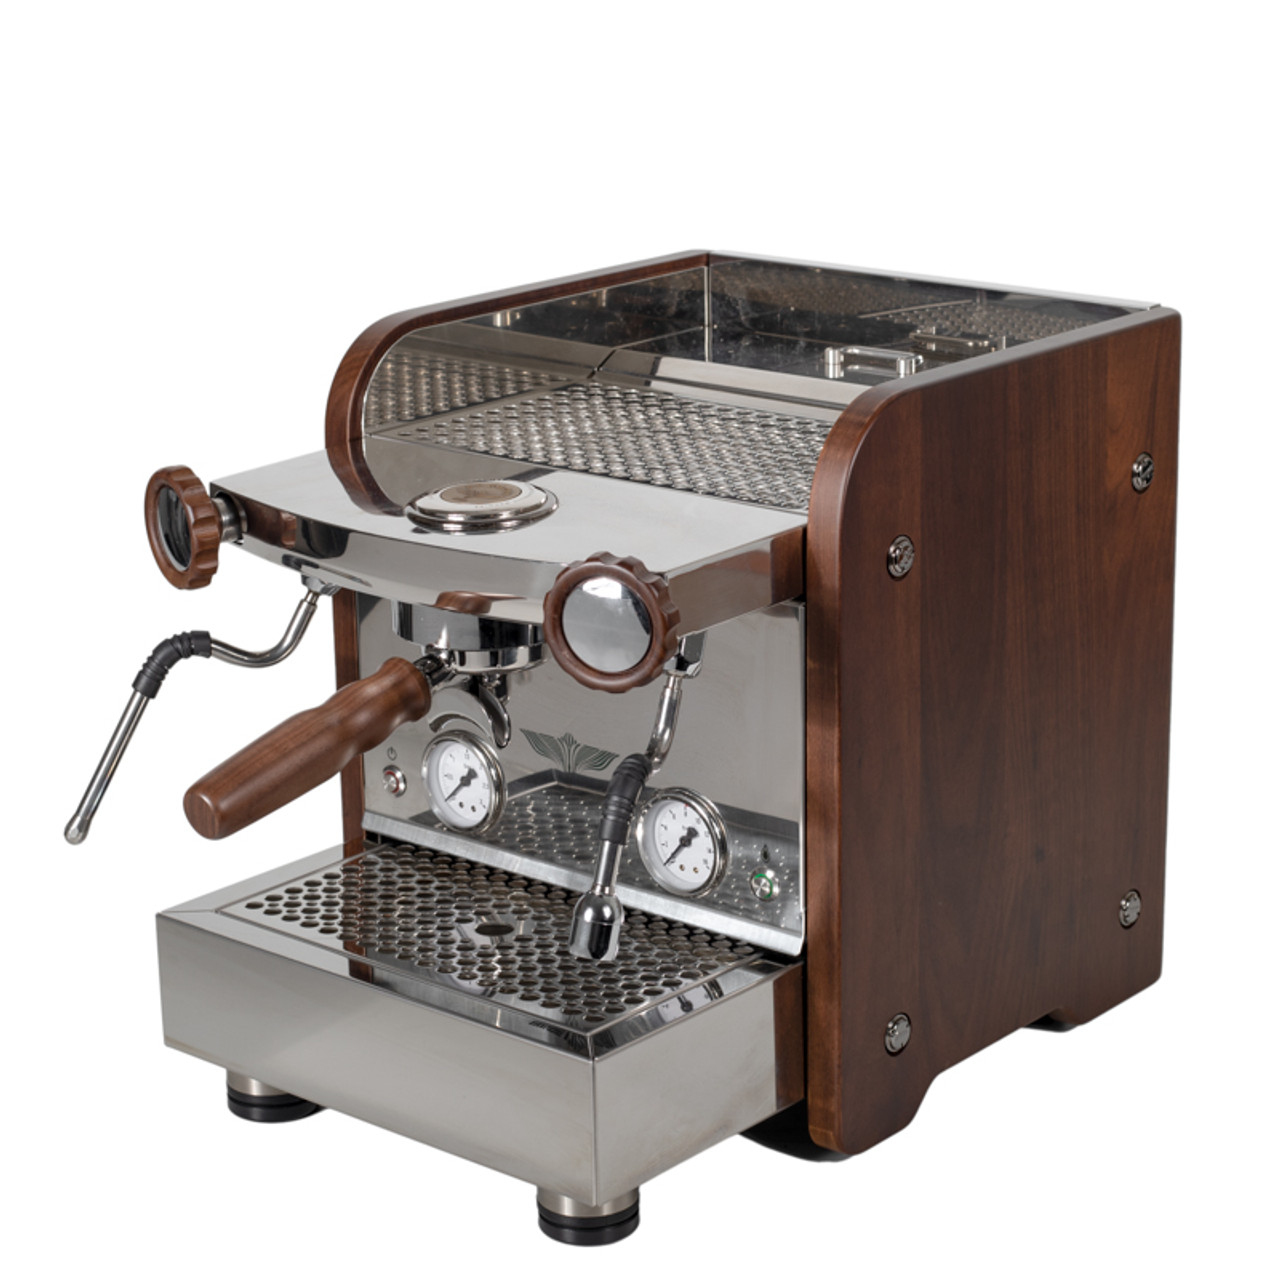 Accessory Kit for 58mm E61 Group Espresso Machines